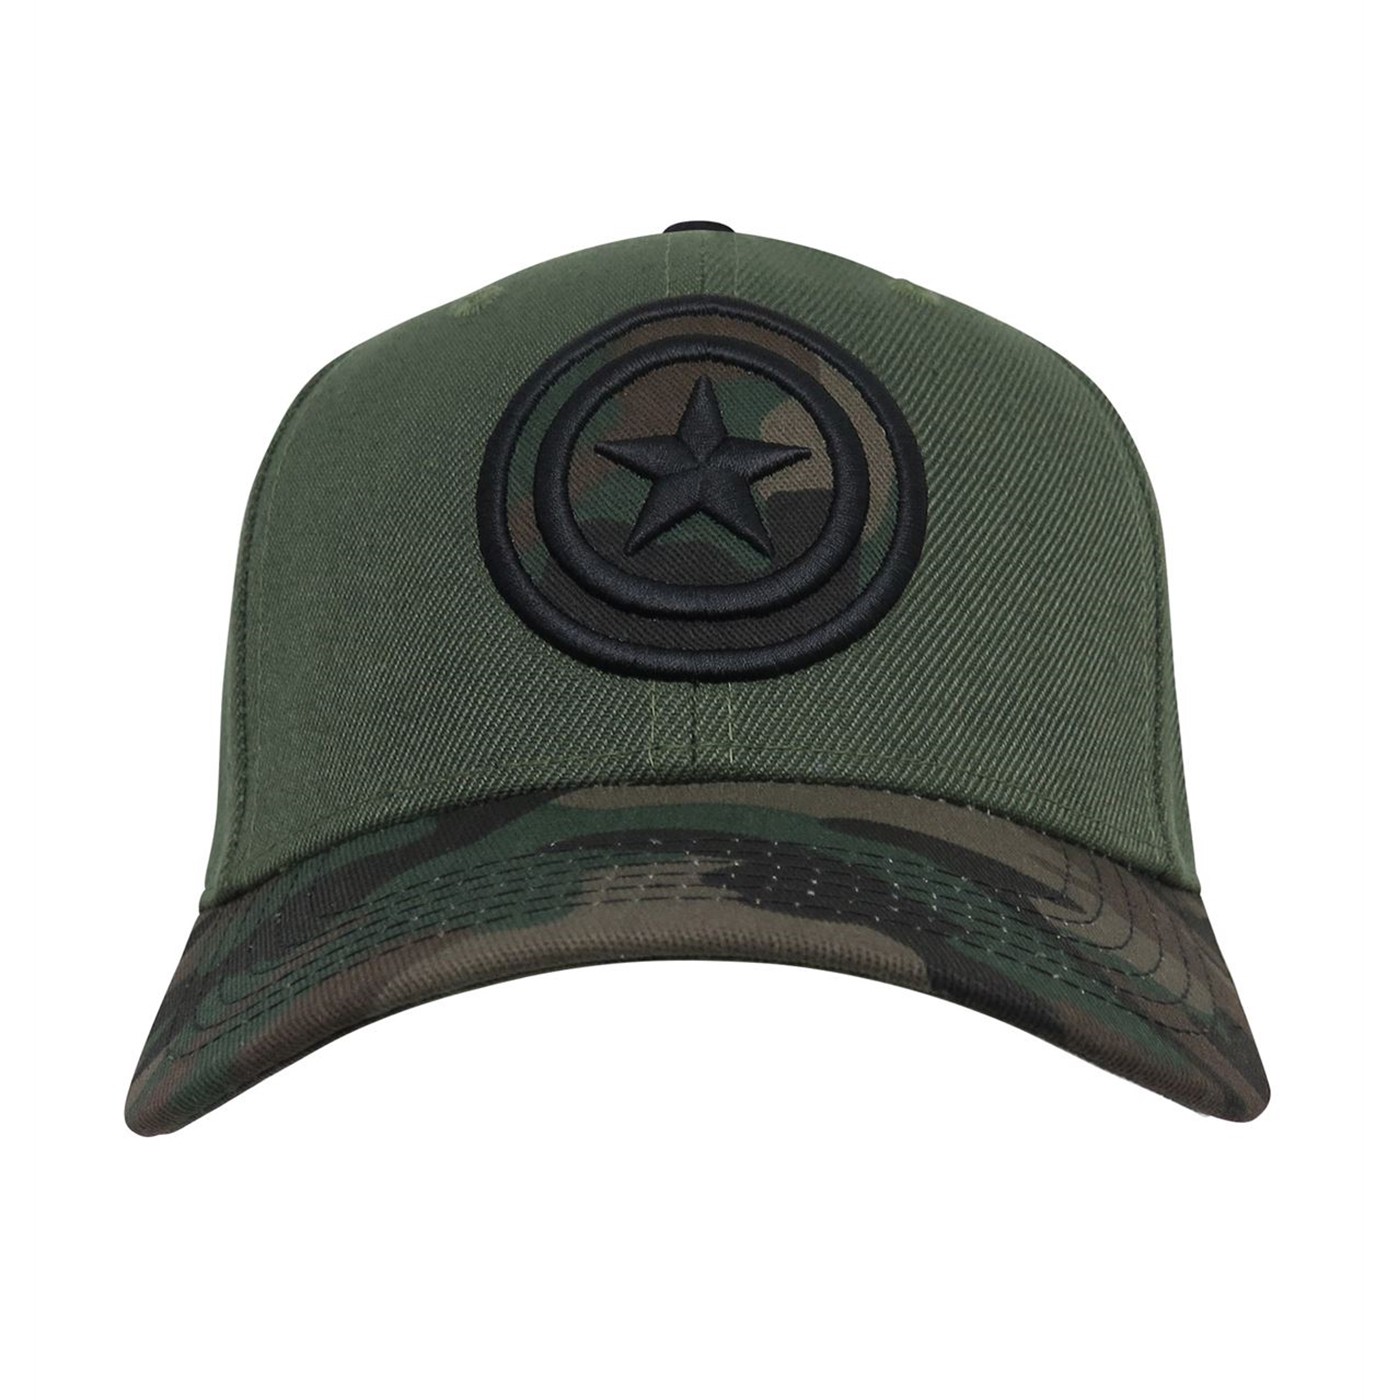 Captain America Camo Adjustable Snapback Hat